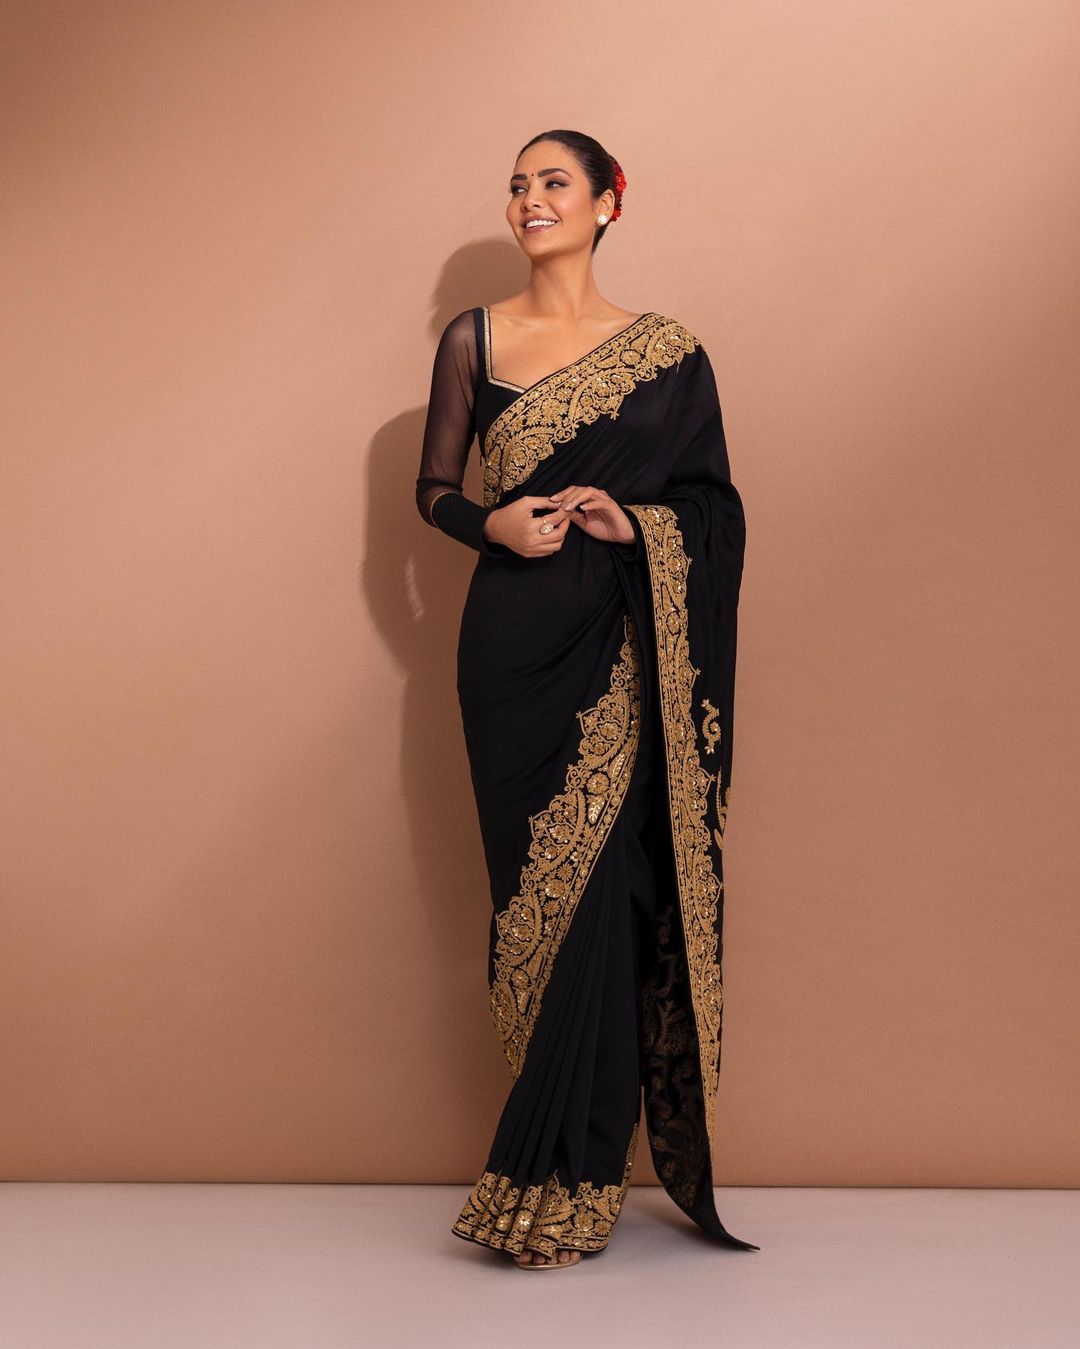 Esha Gupta wears Black Saree Designed by Rohit Bal During Photo Shoot, Jan 2023